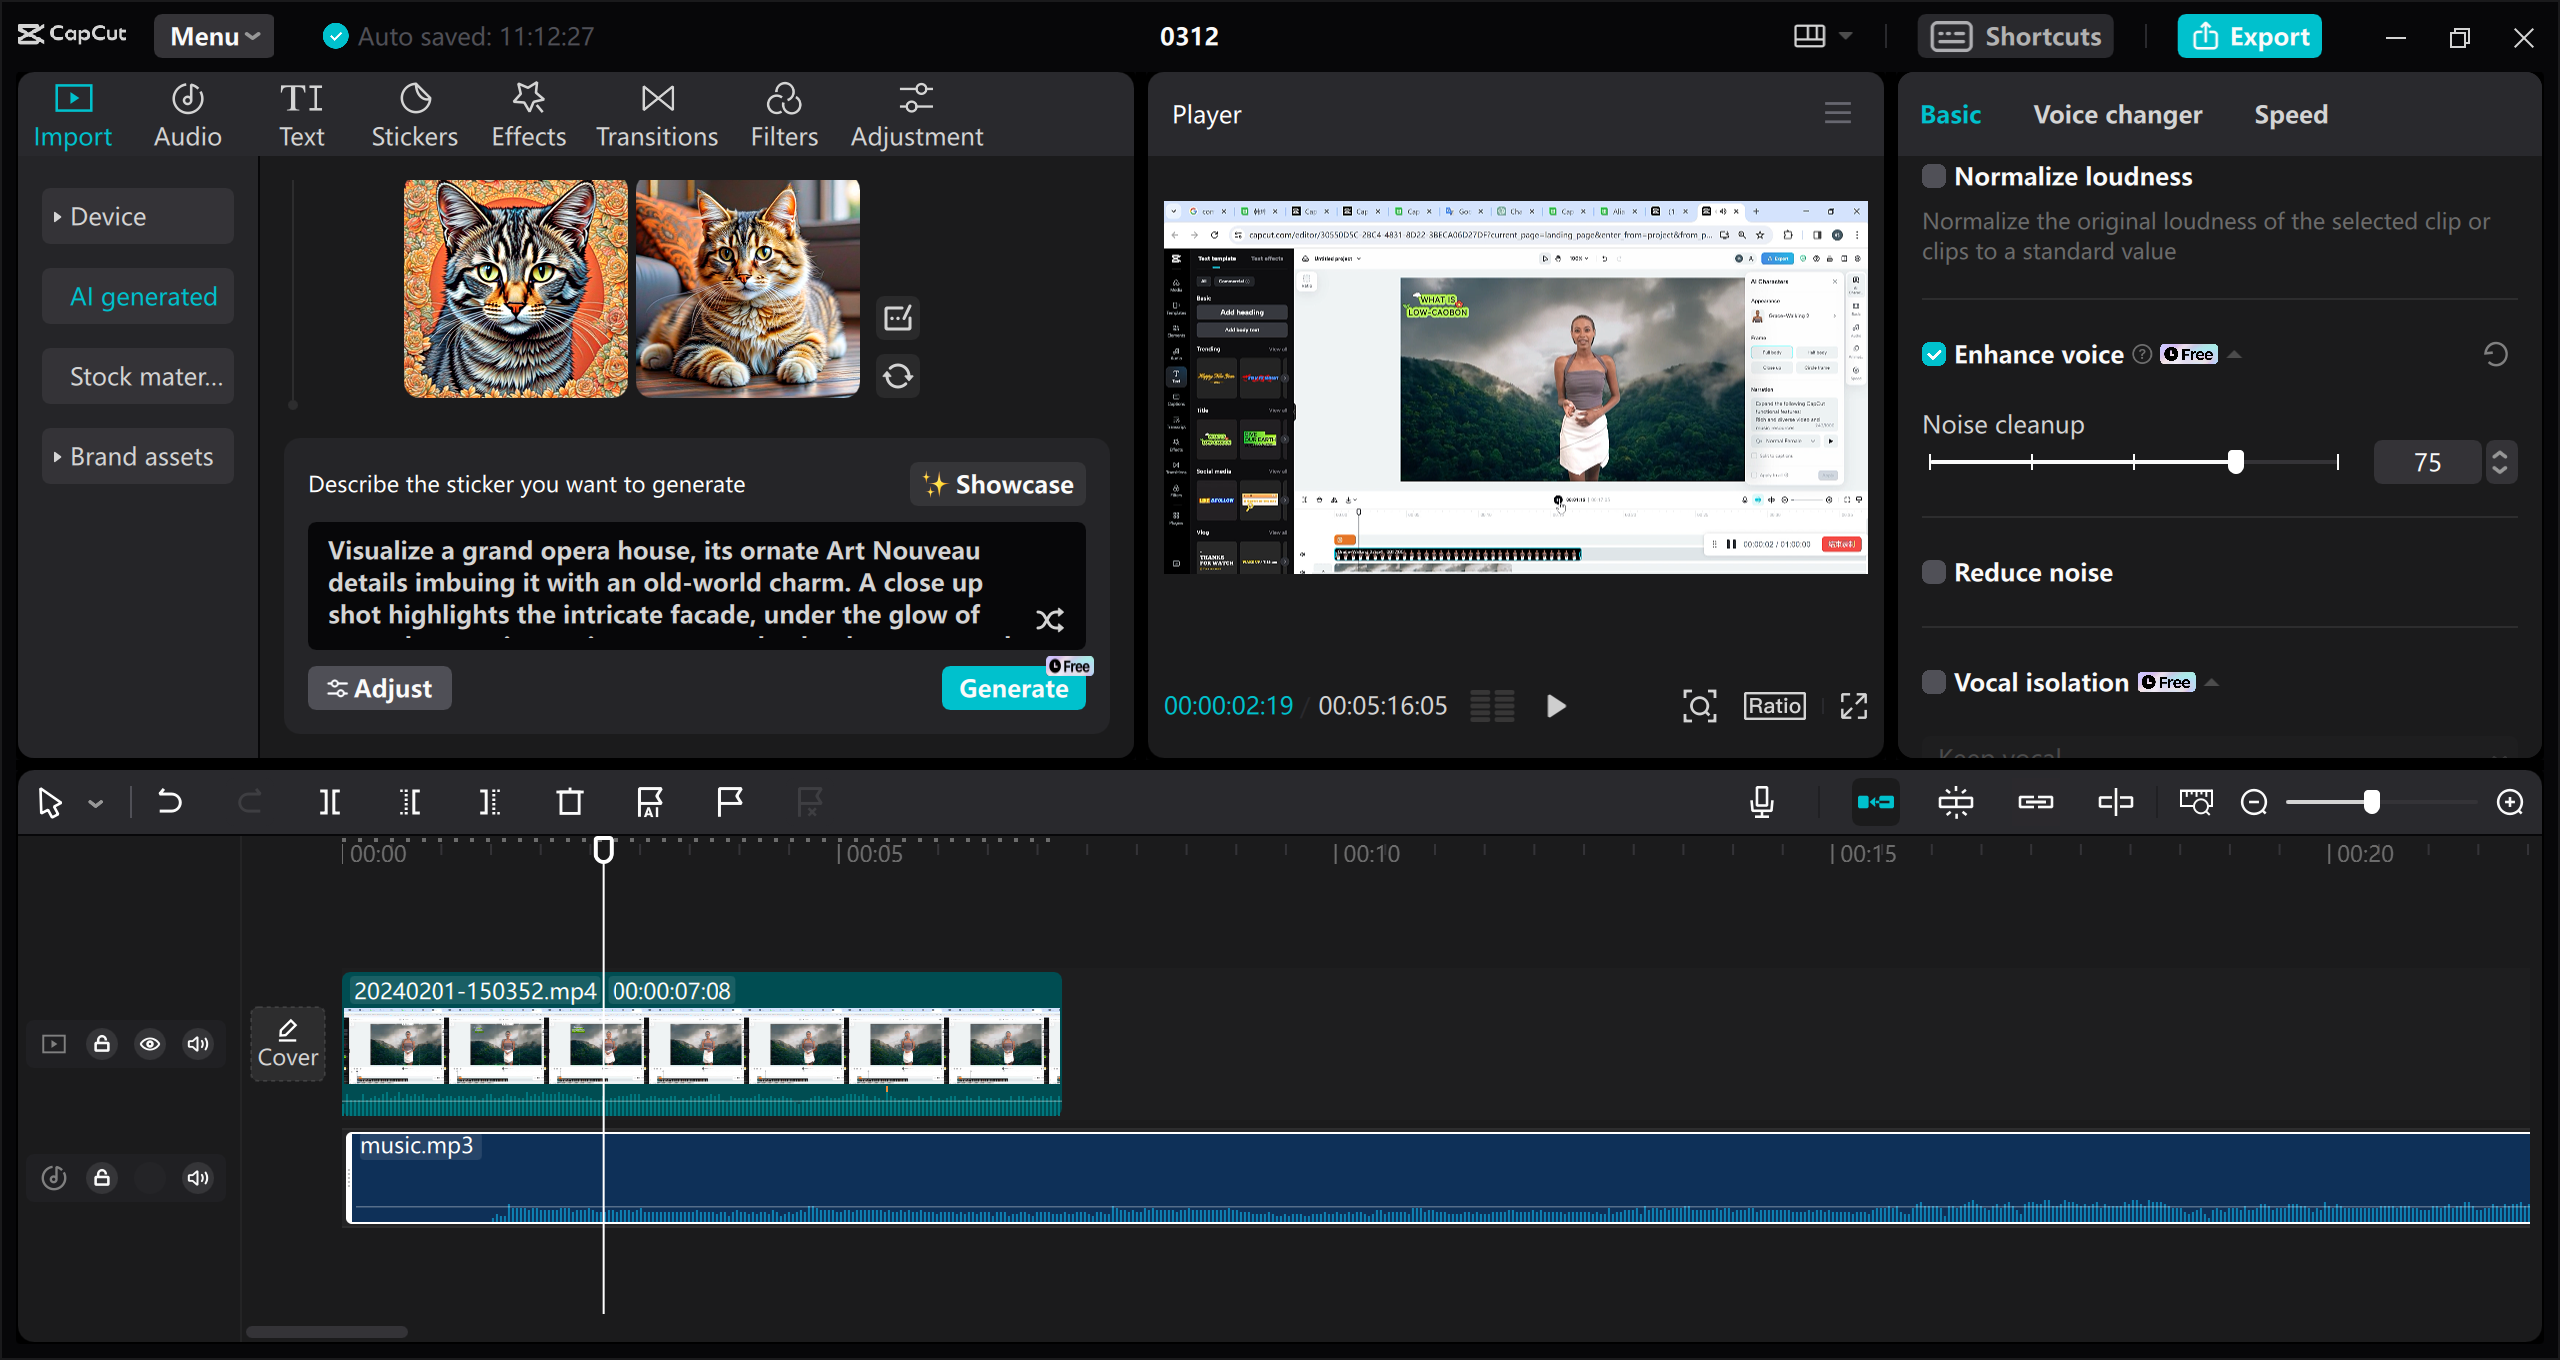 CapCut desktop video editor